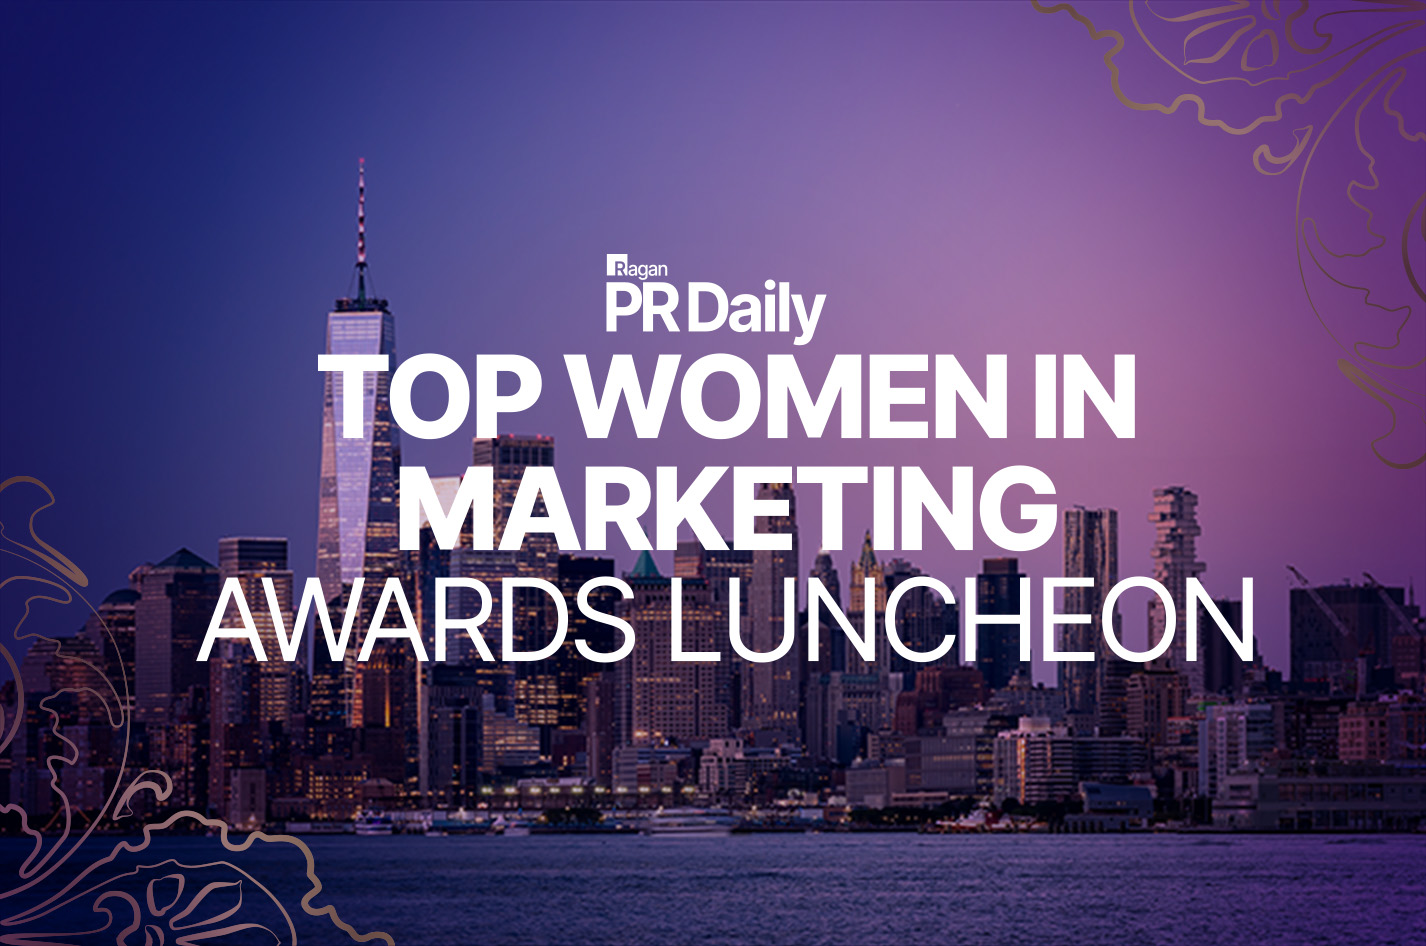 Top Women in Marketing Awards Luncheon